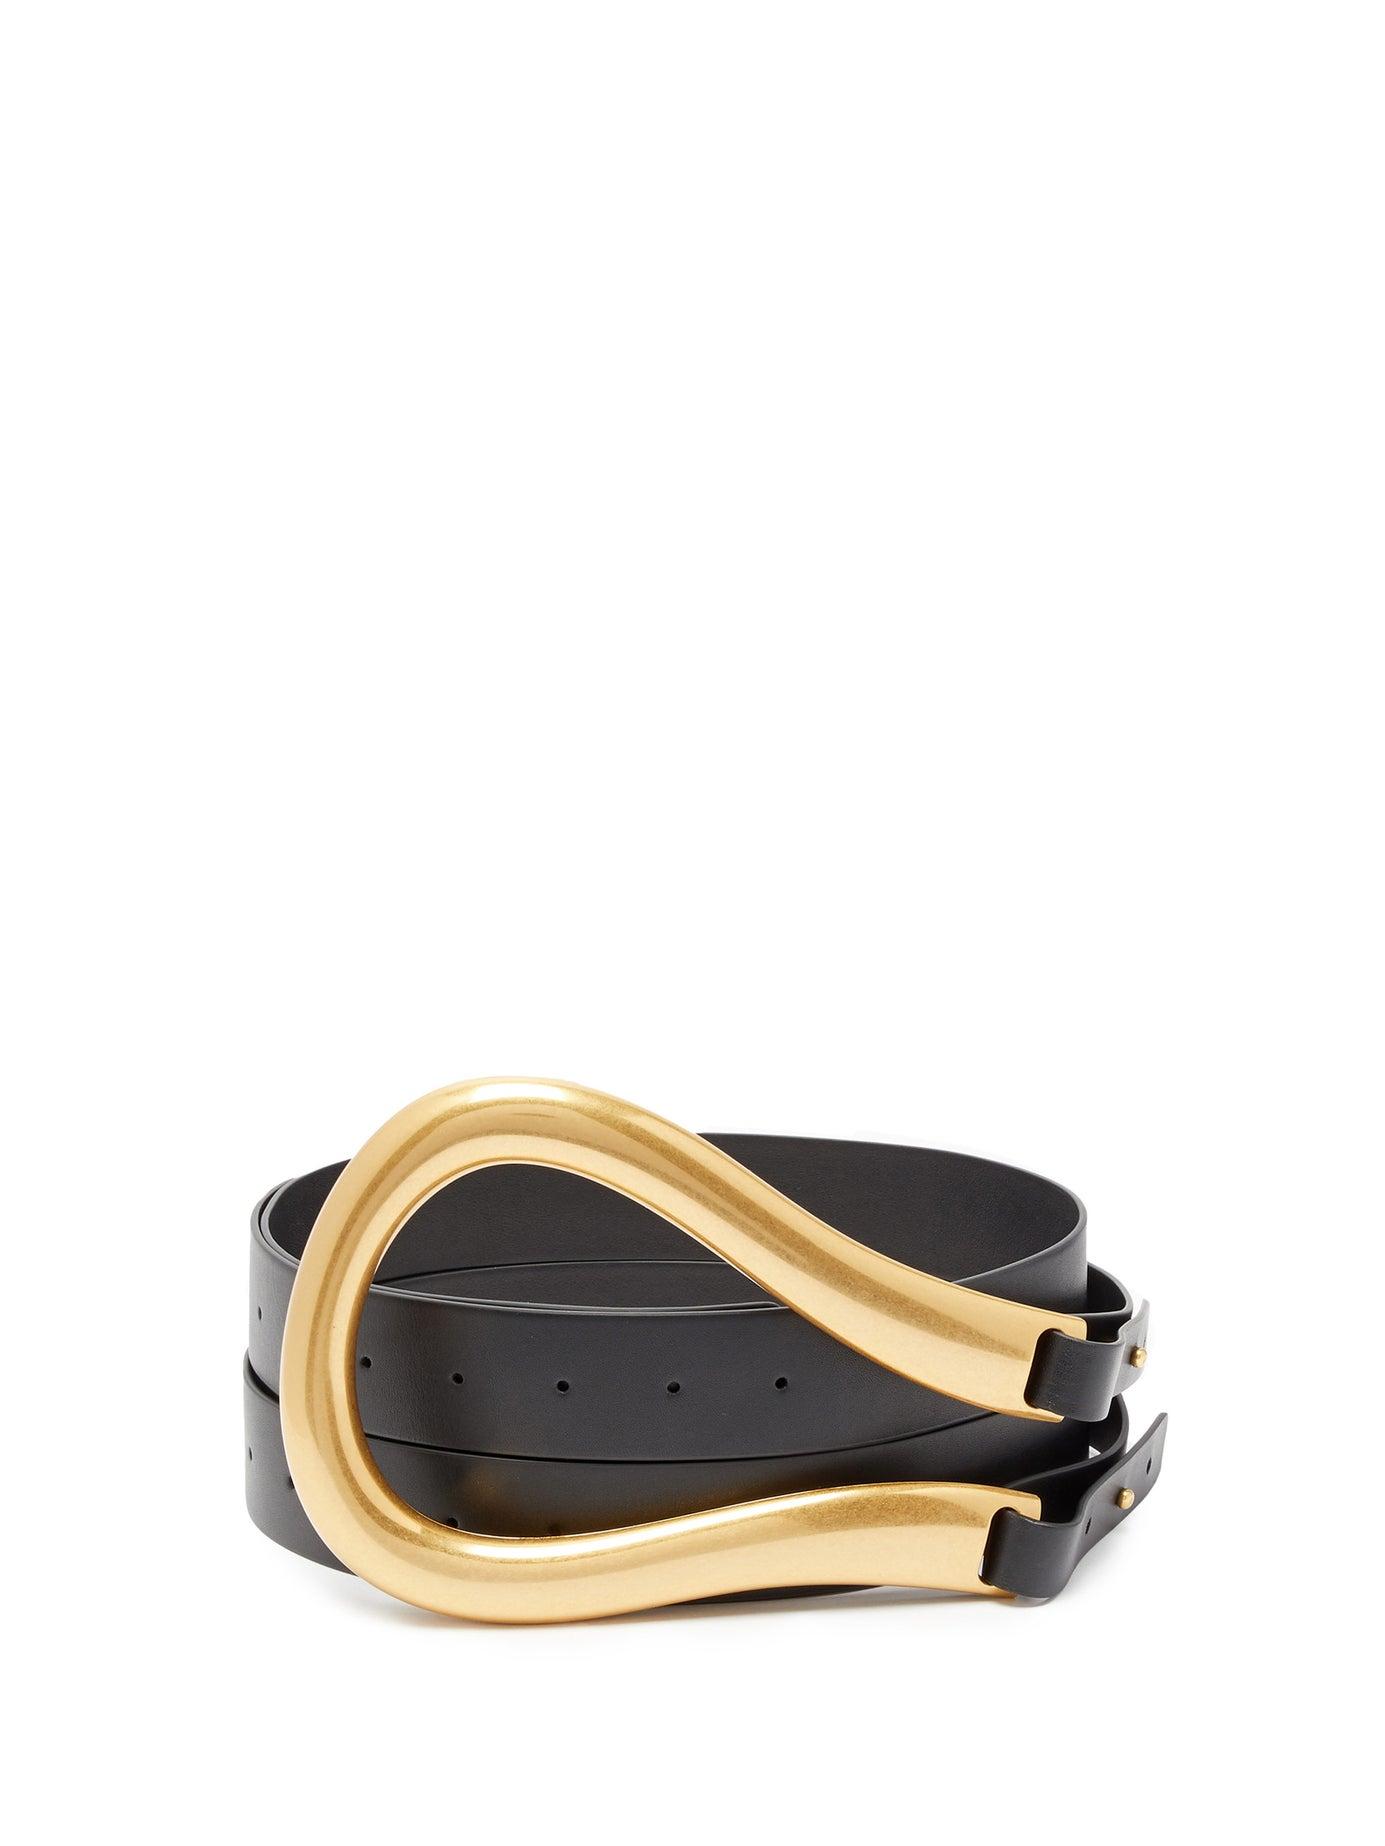 Bottega Veneta Large Curved Loop Leather Belt in Black - Lyst